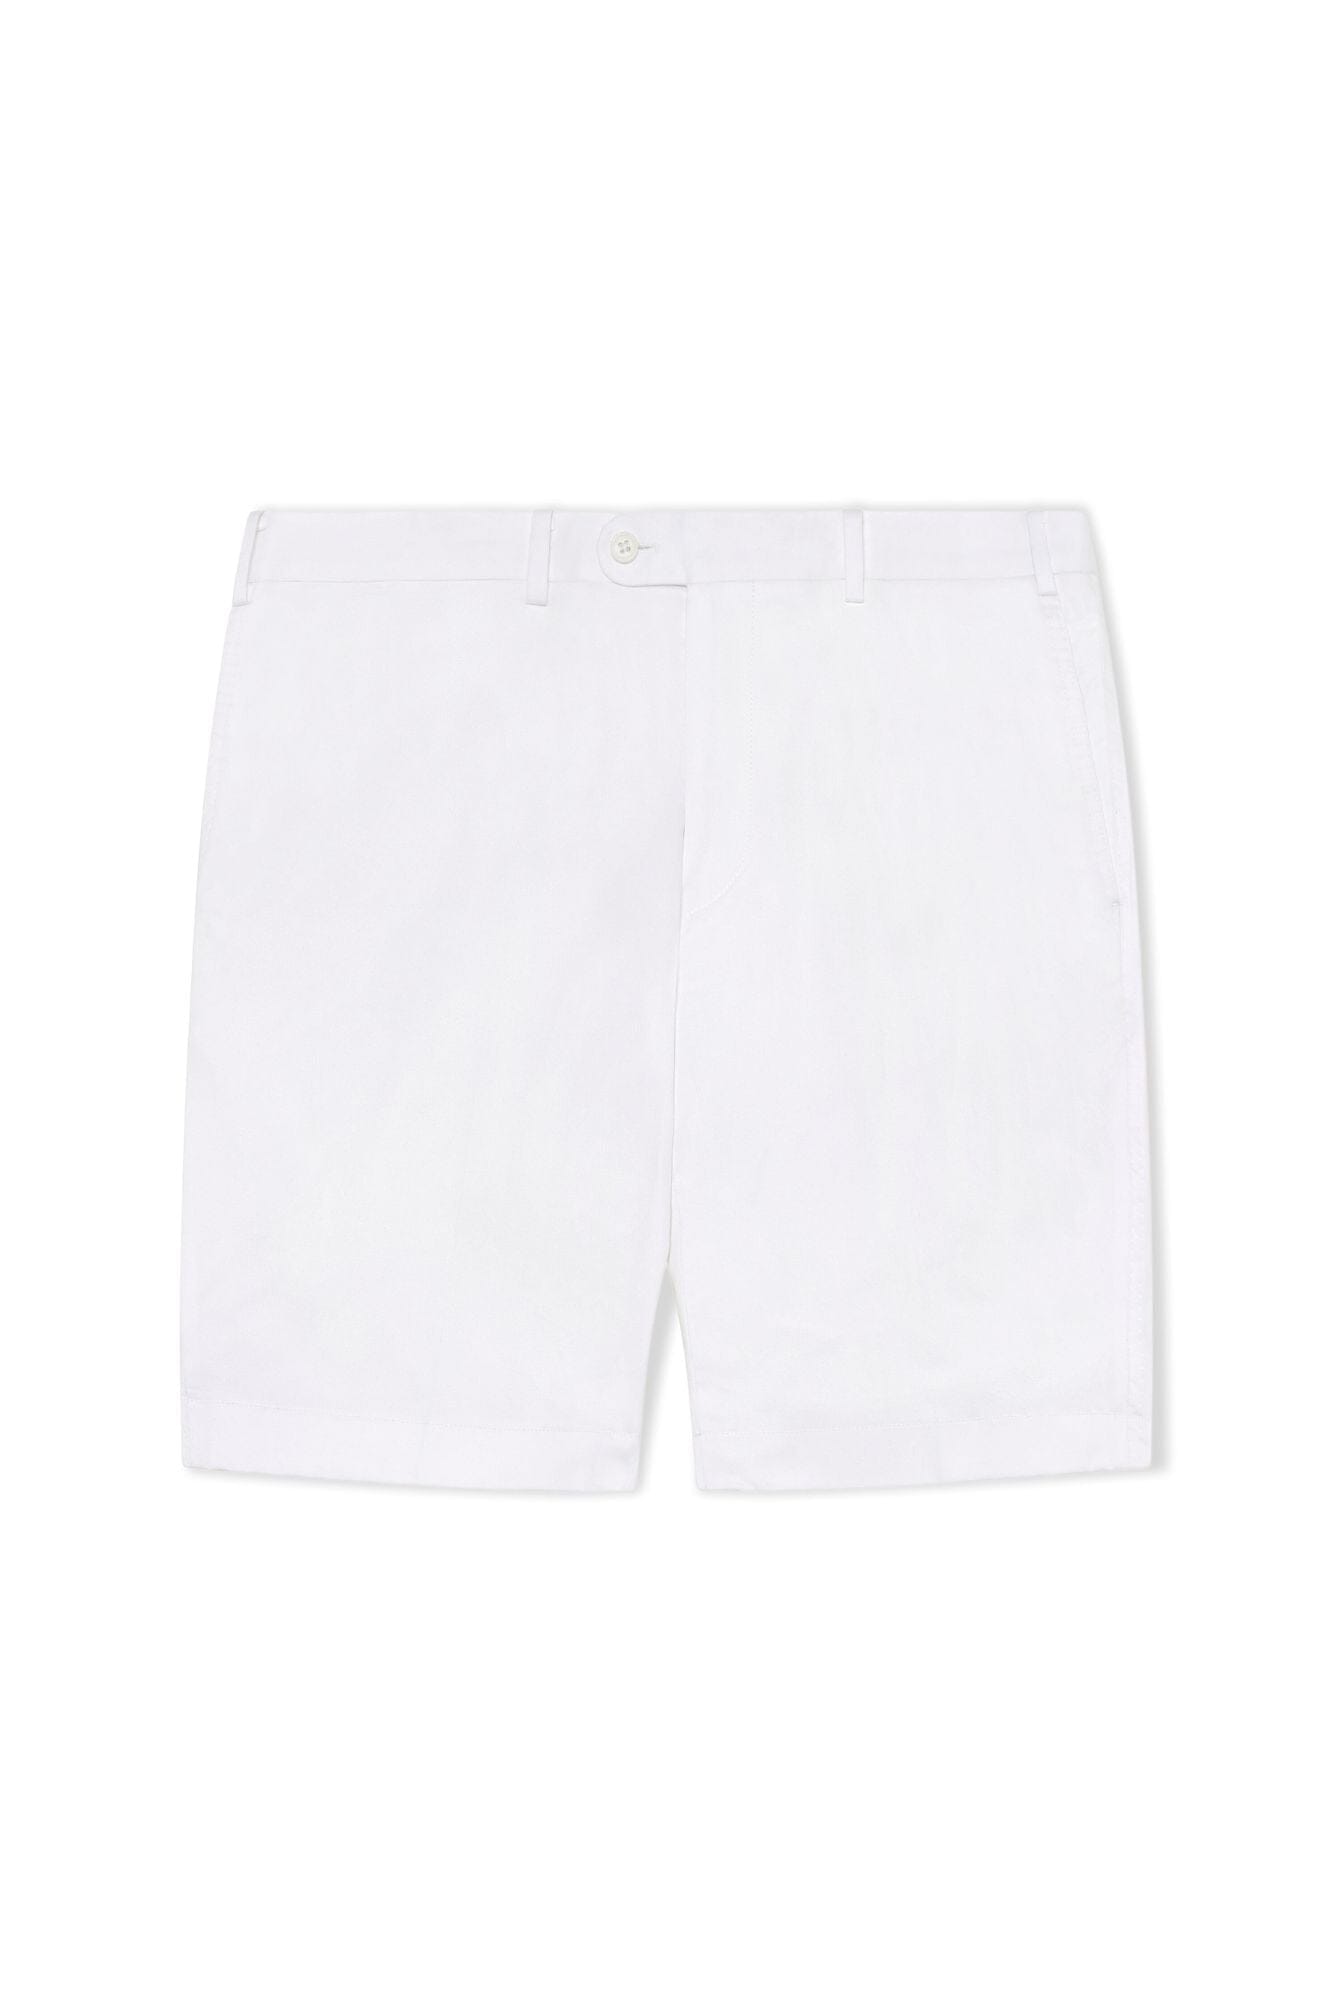 CGC Tailored Shorts - White Stretch Cotton